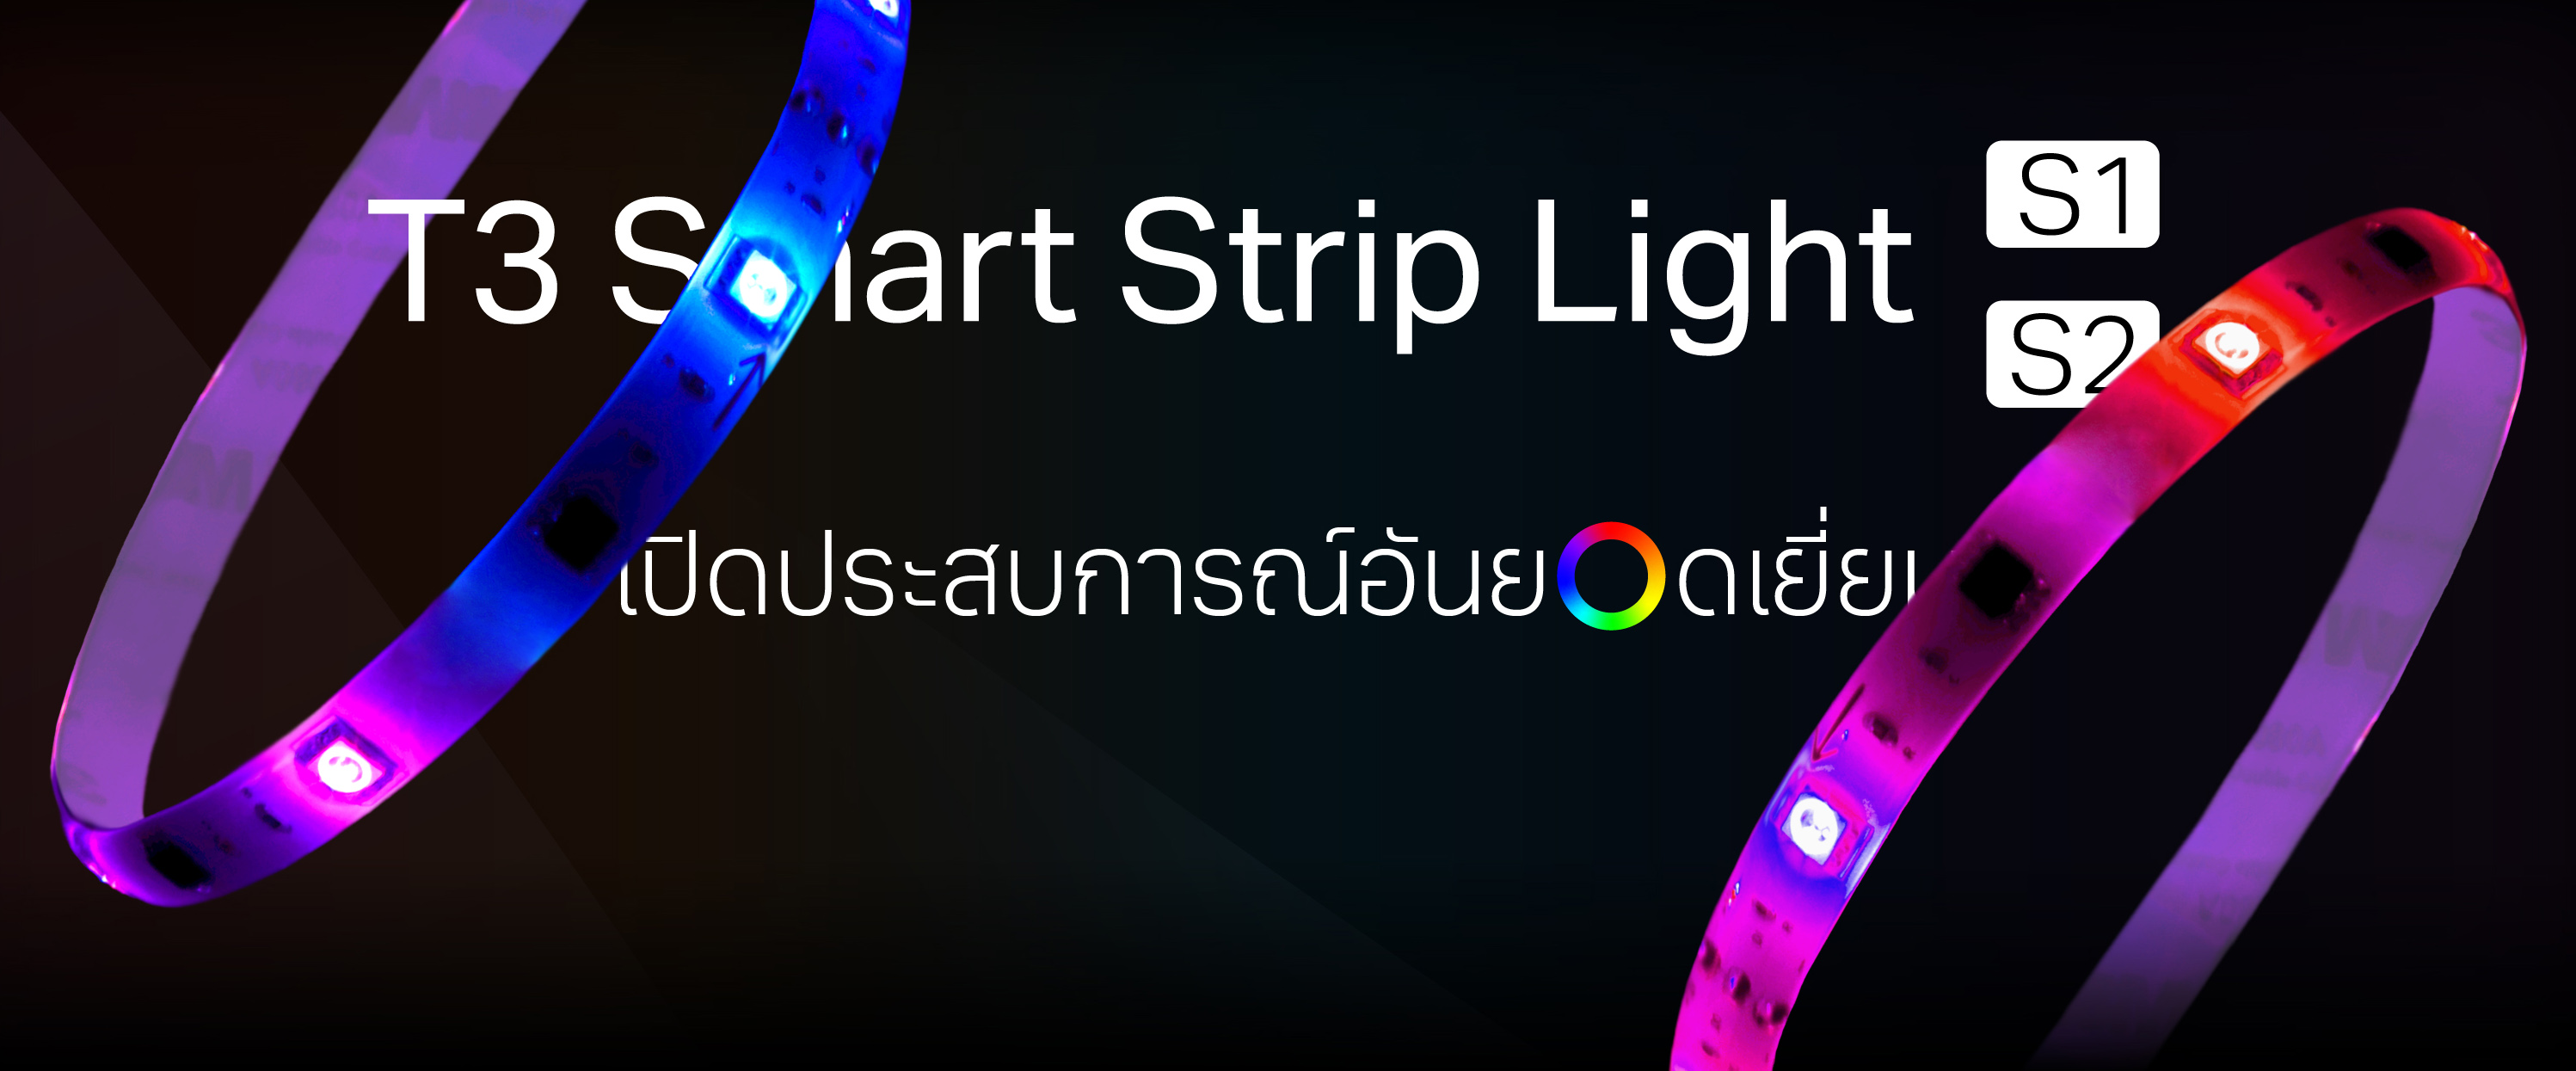 T3 Smart Strip Light S1&S2